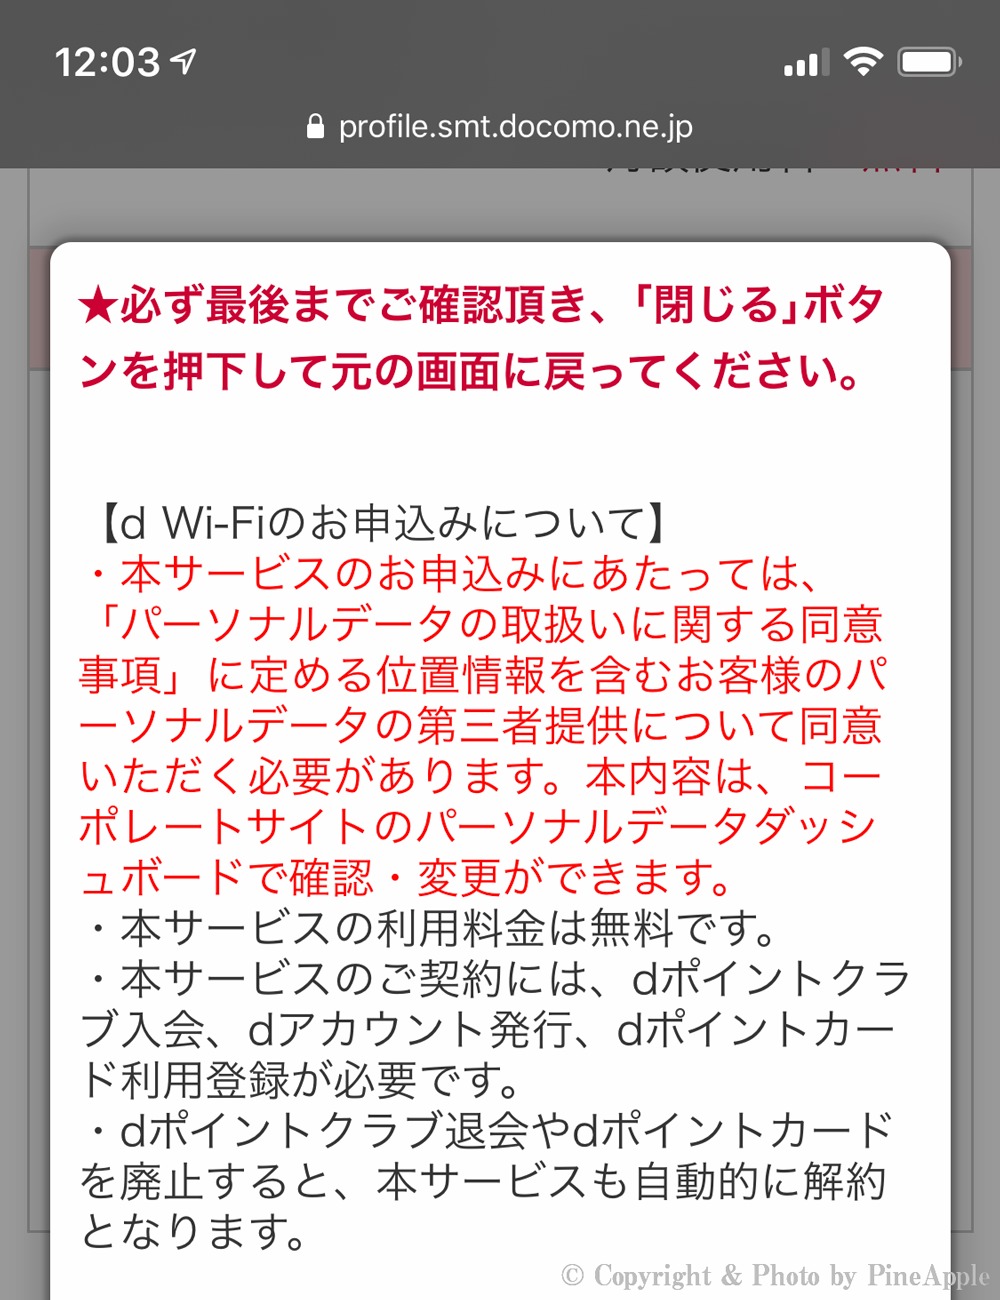 d Wi-Fi："d Wi-Fi 注意事項・利用規約・パーソナルデータの取扱い"